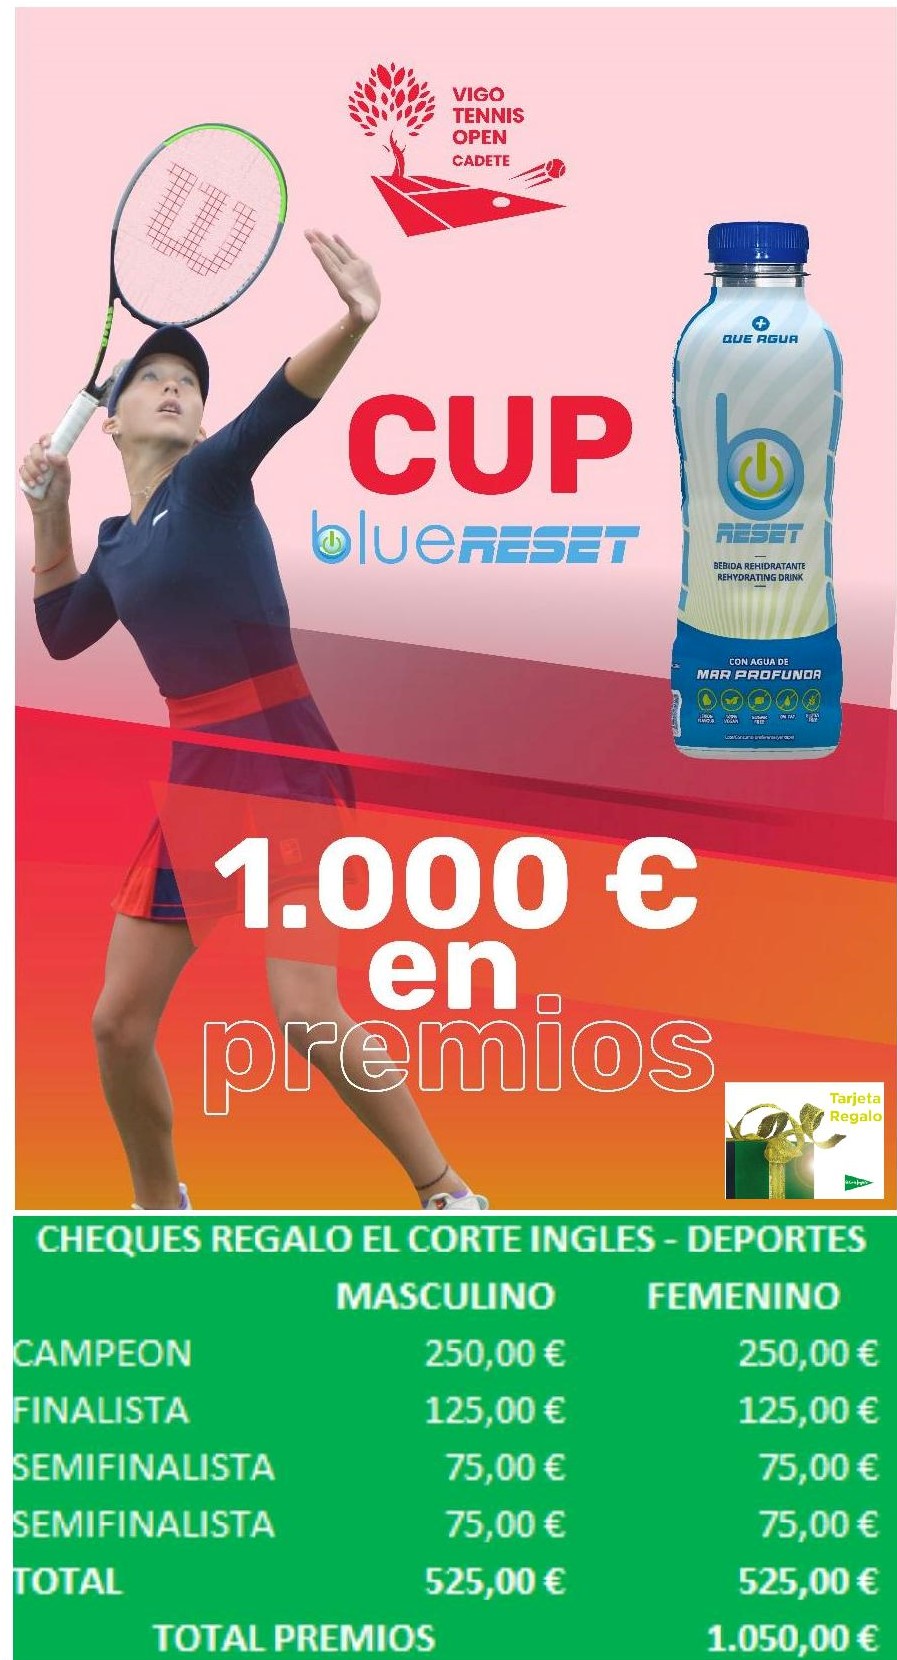 cartel Vigo Tennis Open Cadete 2022 - BlueReset Cup